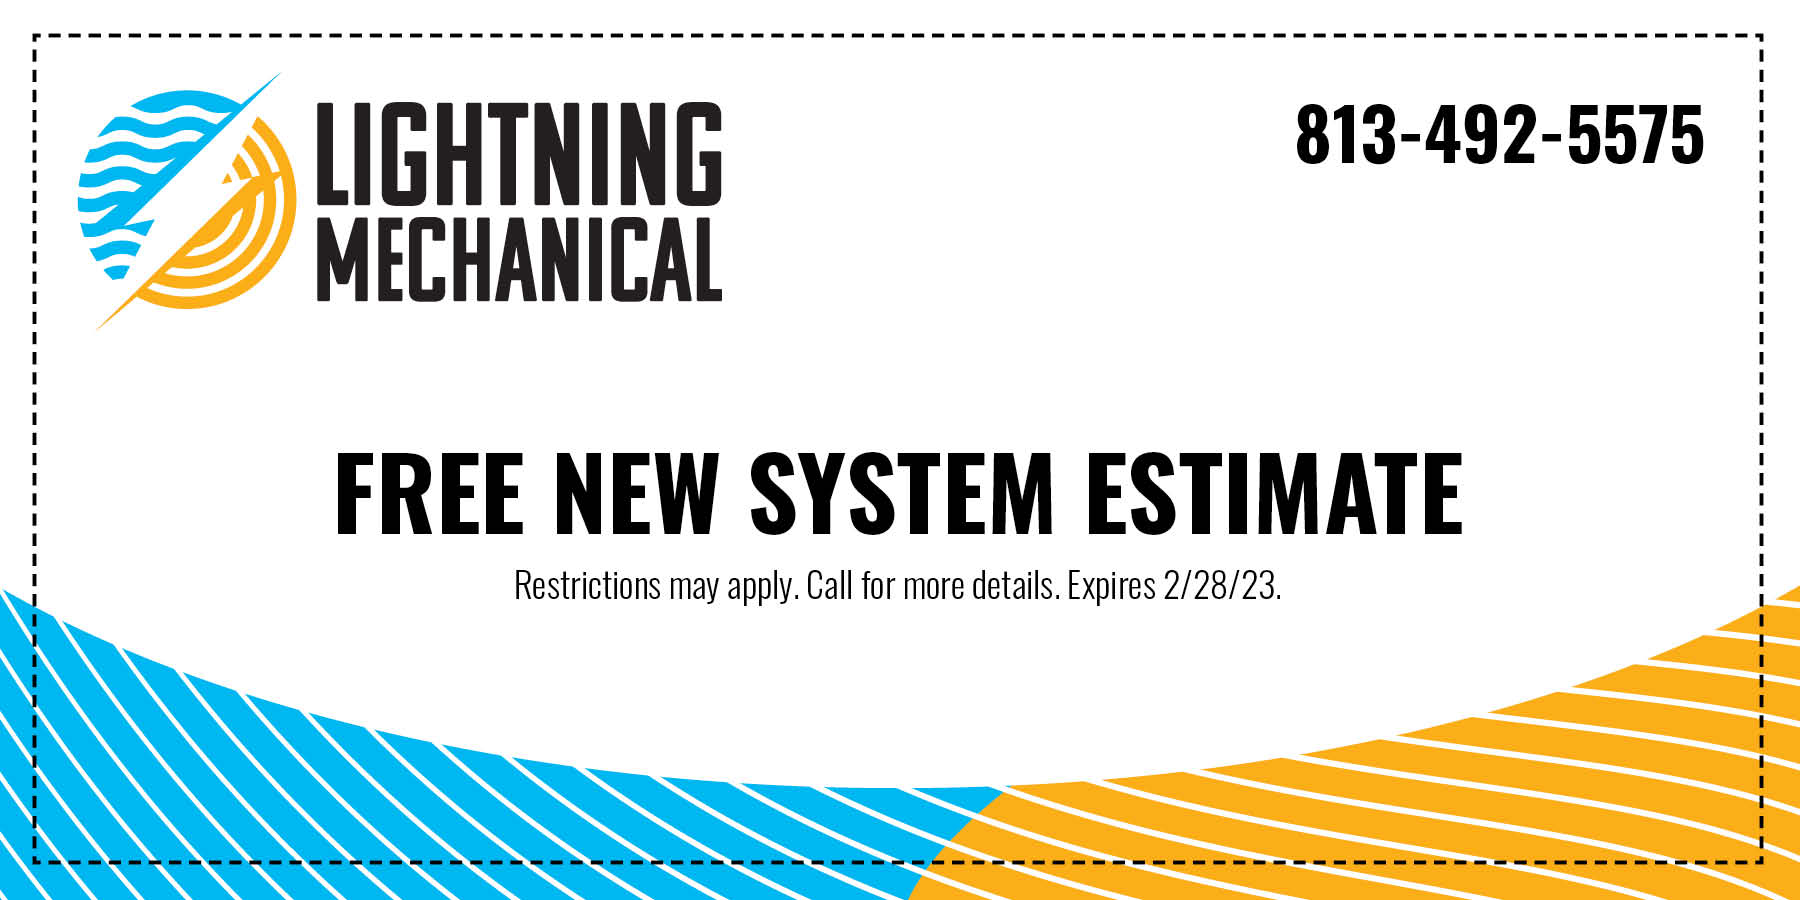 Free new system estimate expires 2/28/2023.